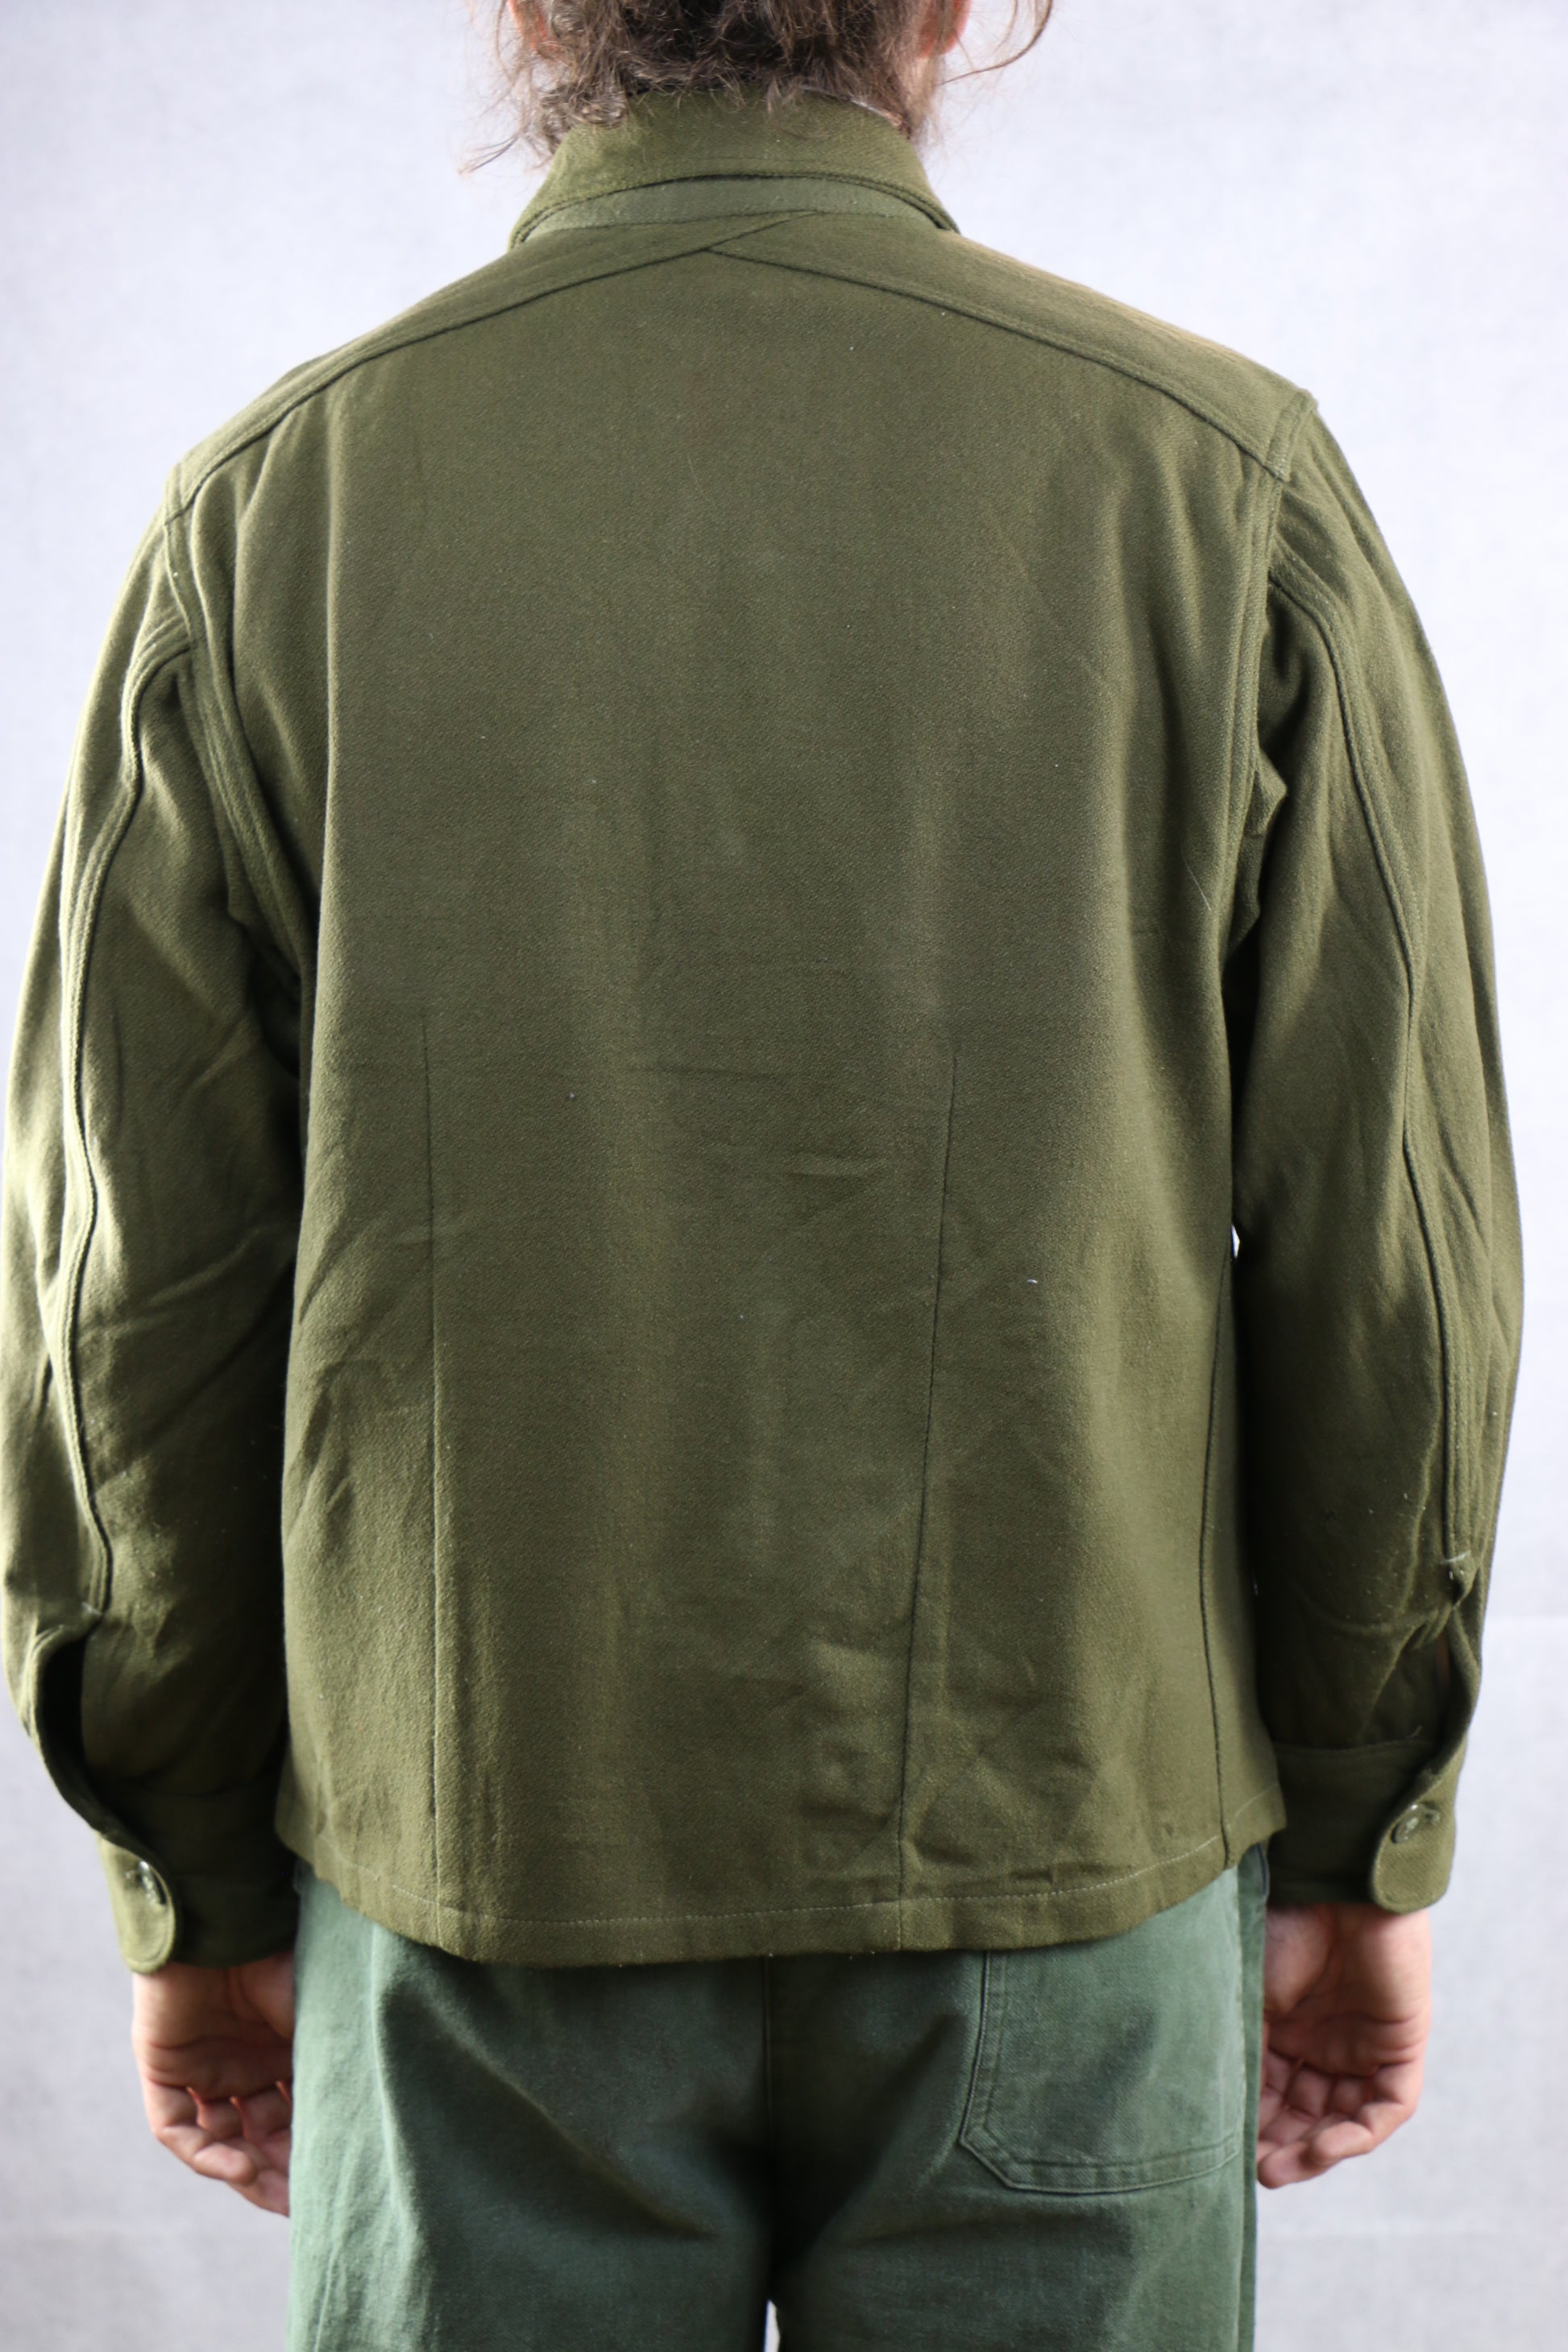 U.S. Army OG-108 Shirt - vintage clothing clochard92.com